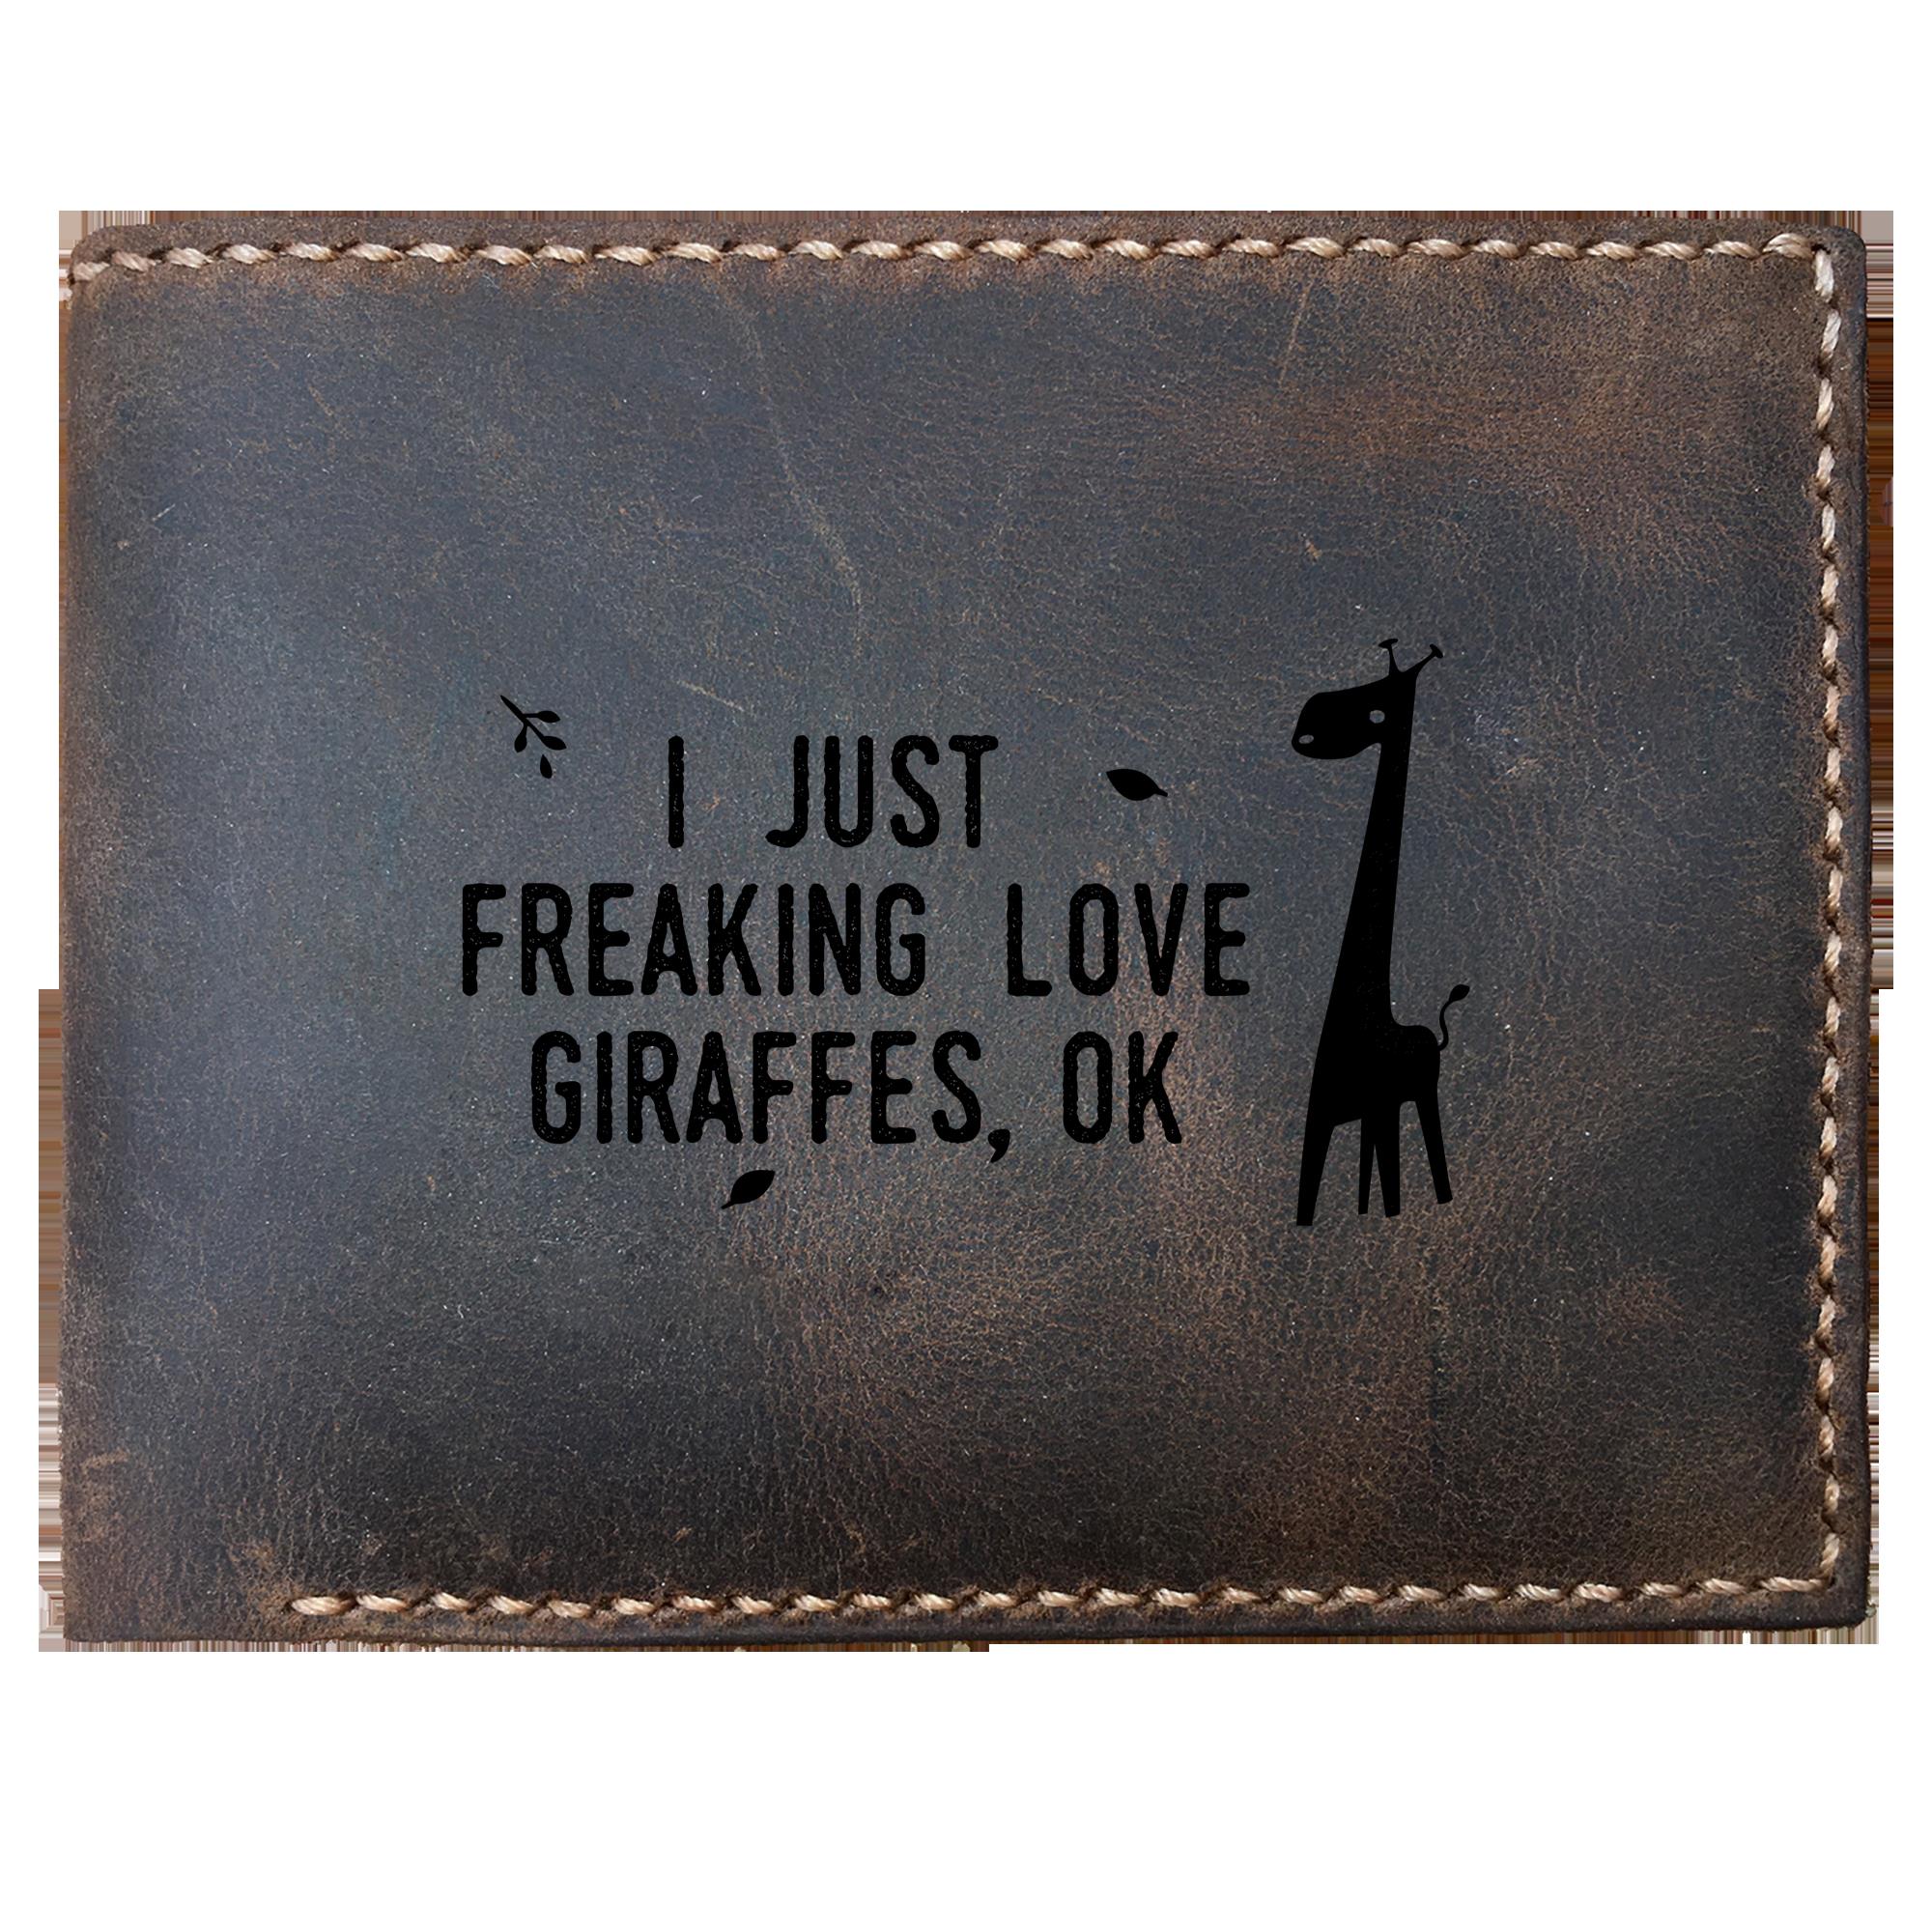 Skitongifts Funny Custom Laser Engraved Bifold Leather Wallet For Men, I Just Freaking Love Giraffes, Ok Animal Lover